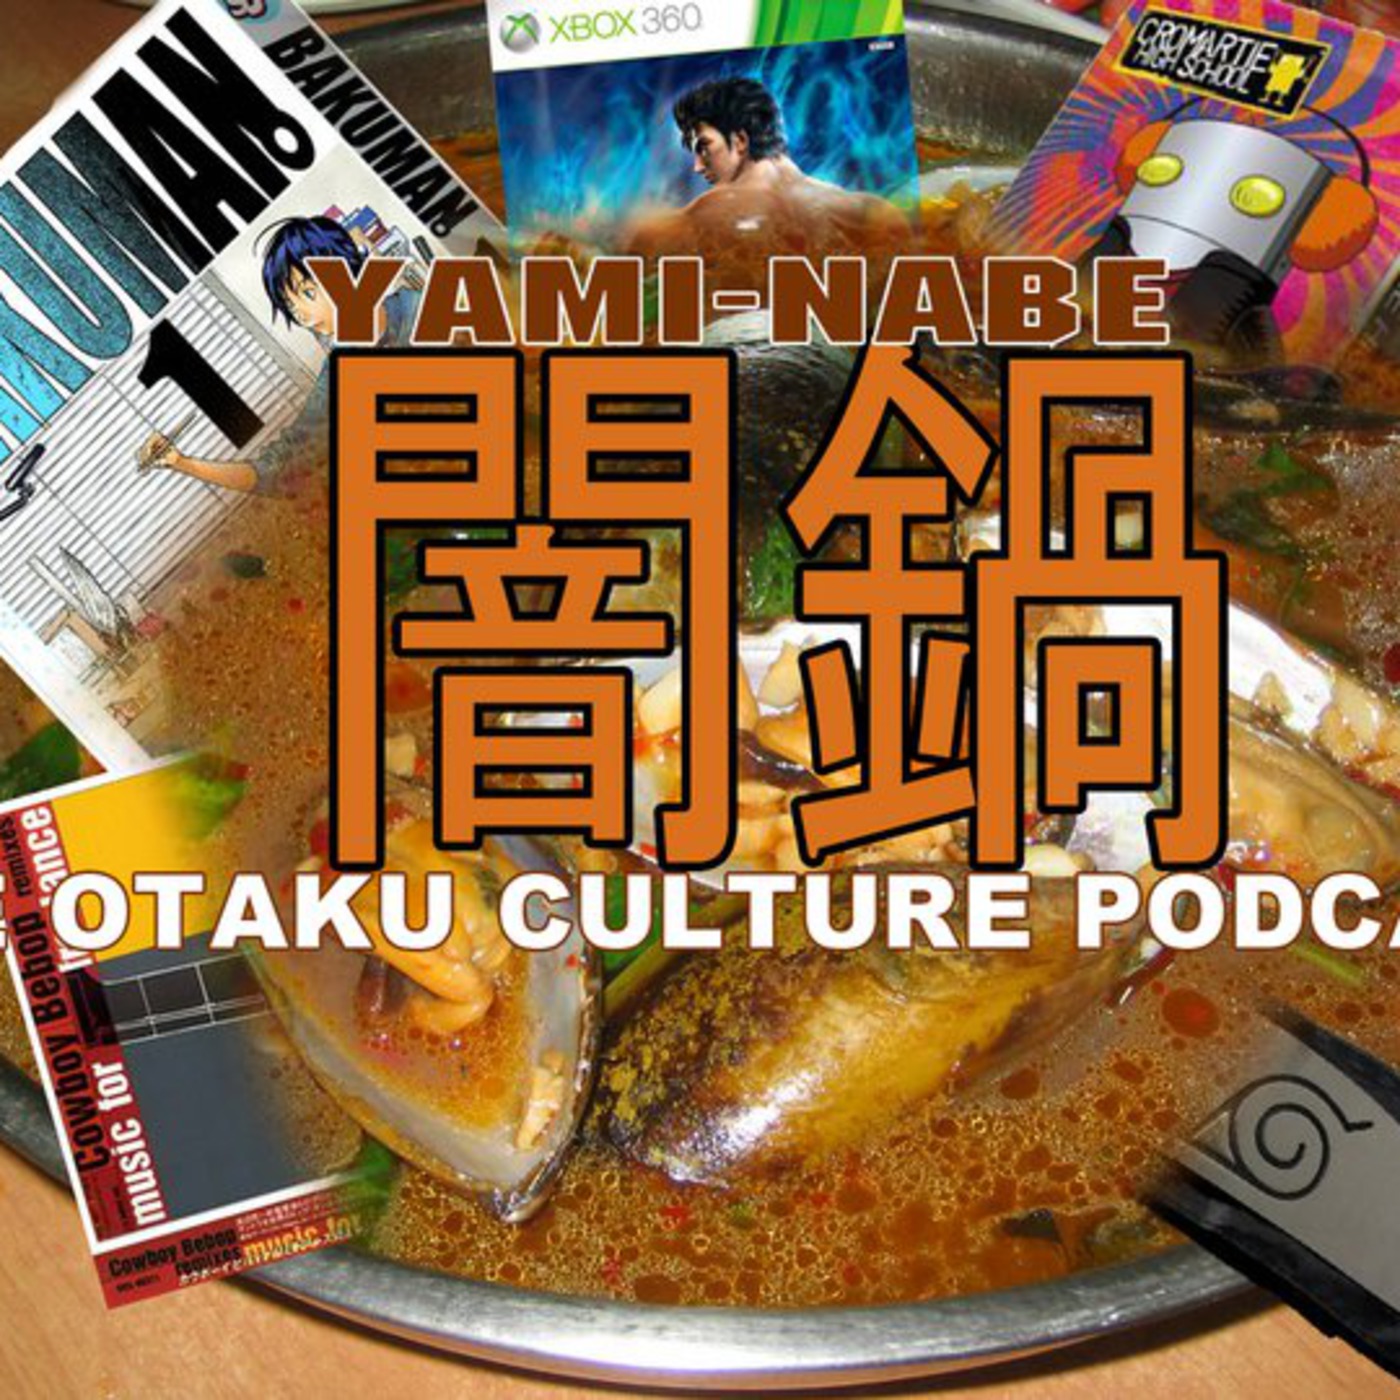 YamiNabe: The Otaku Culture Podcast